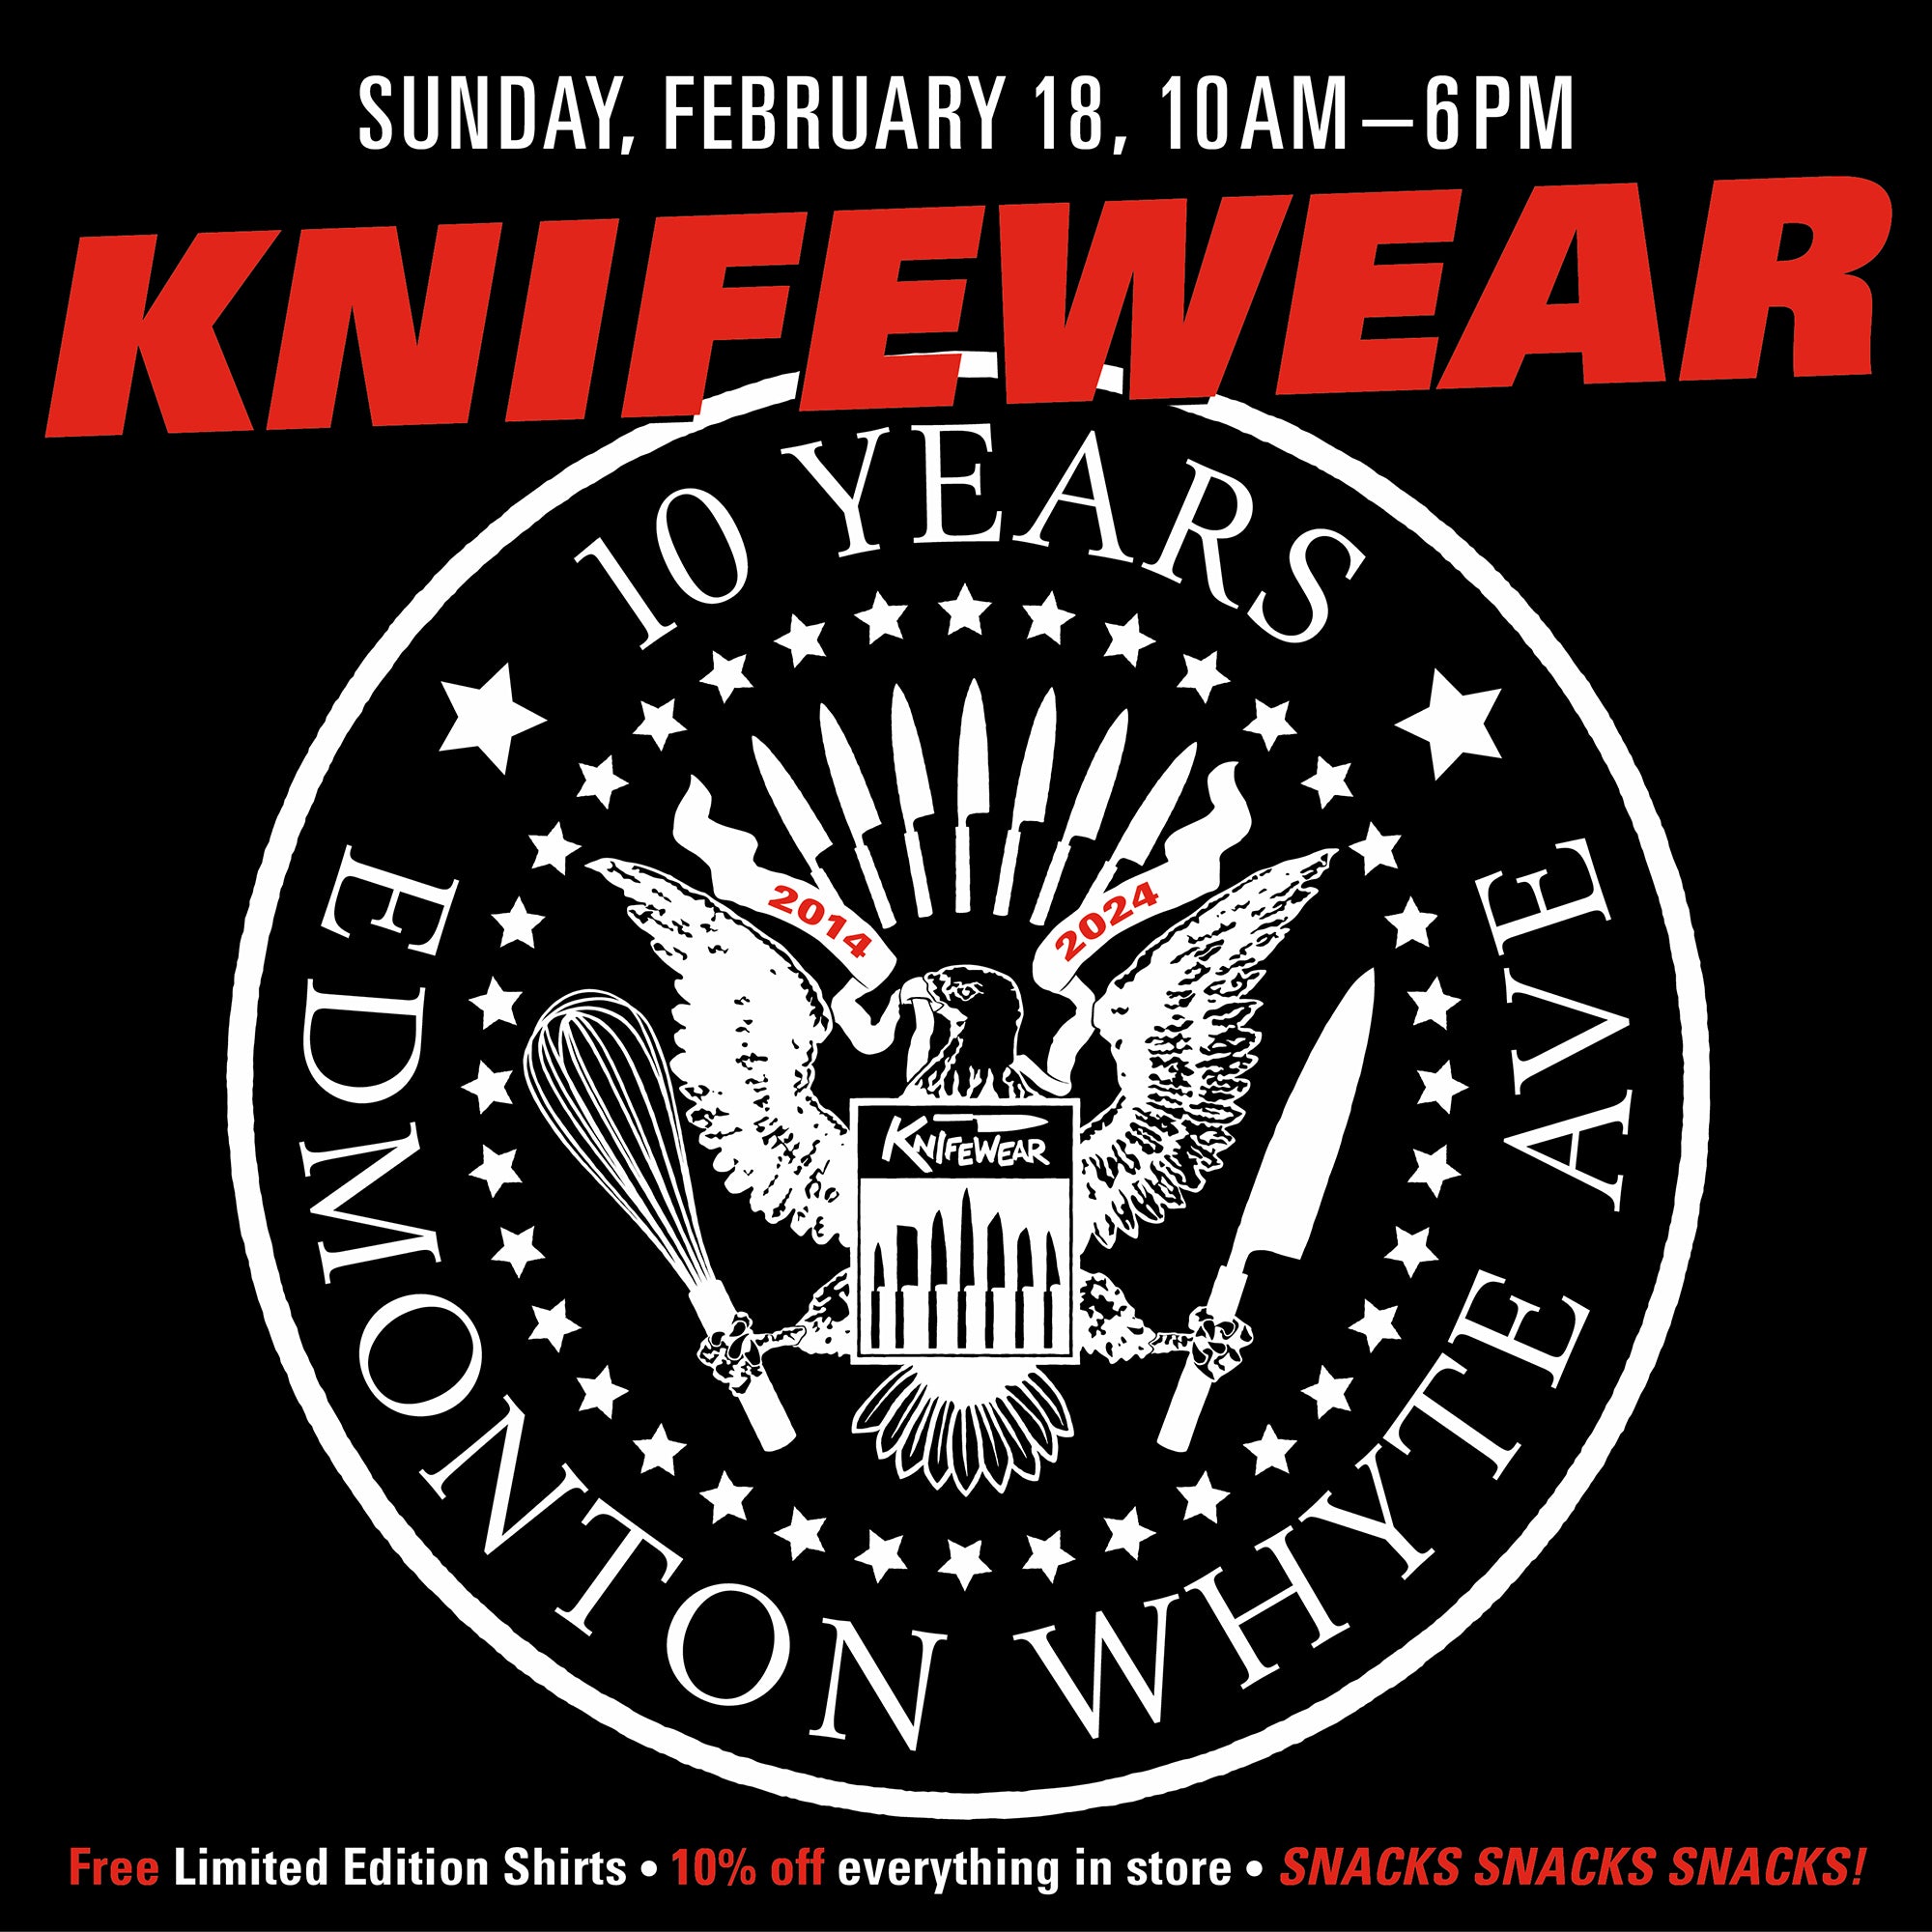 Knifewear Edmonton's Tenth Birthday, Feb 18!